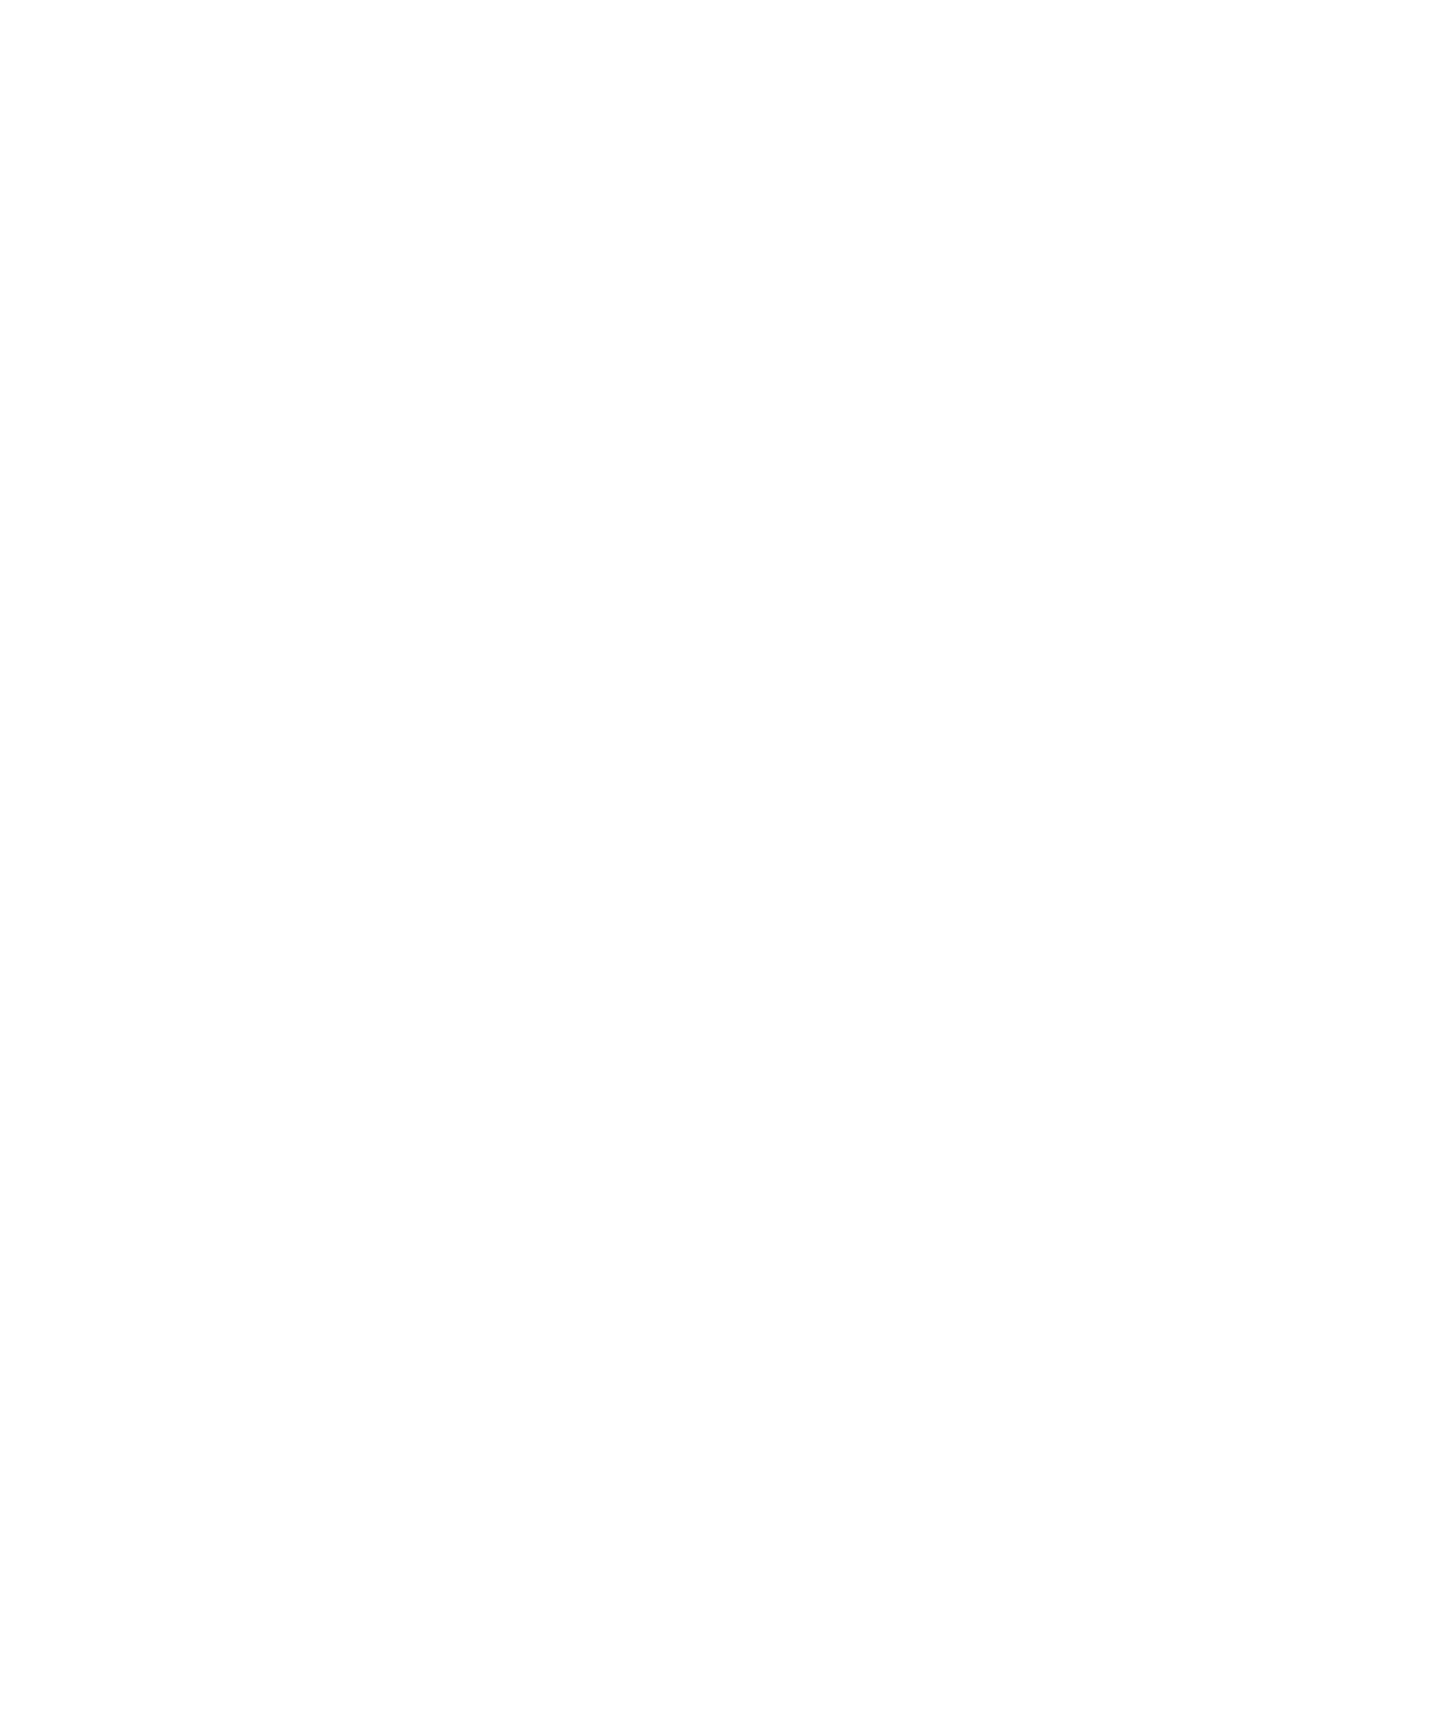 Digital Bros logo pour fonds sombres (PNG transparent)